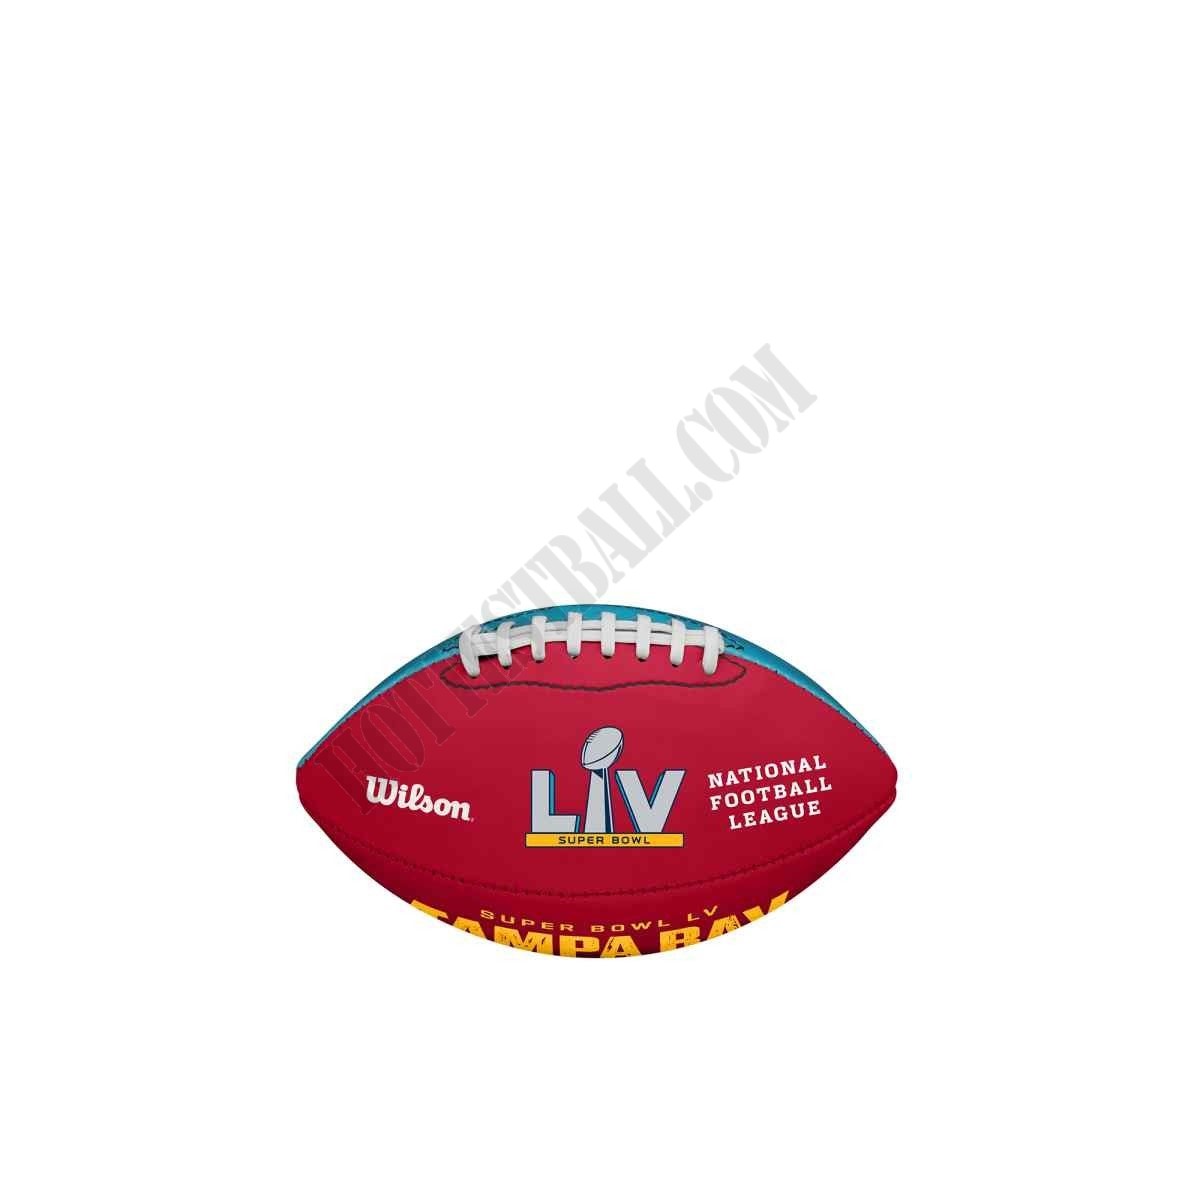 Super Bowl LV Micro Mini Football ● Wilson Promotions - Super Bowl LV Micro Mini Football ● Wilson Promotions